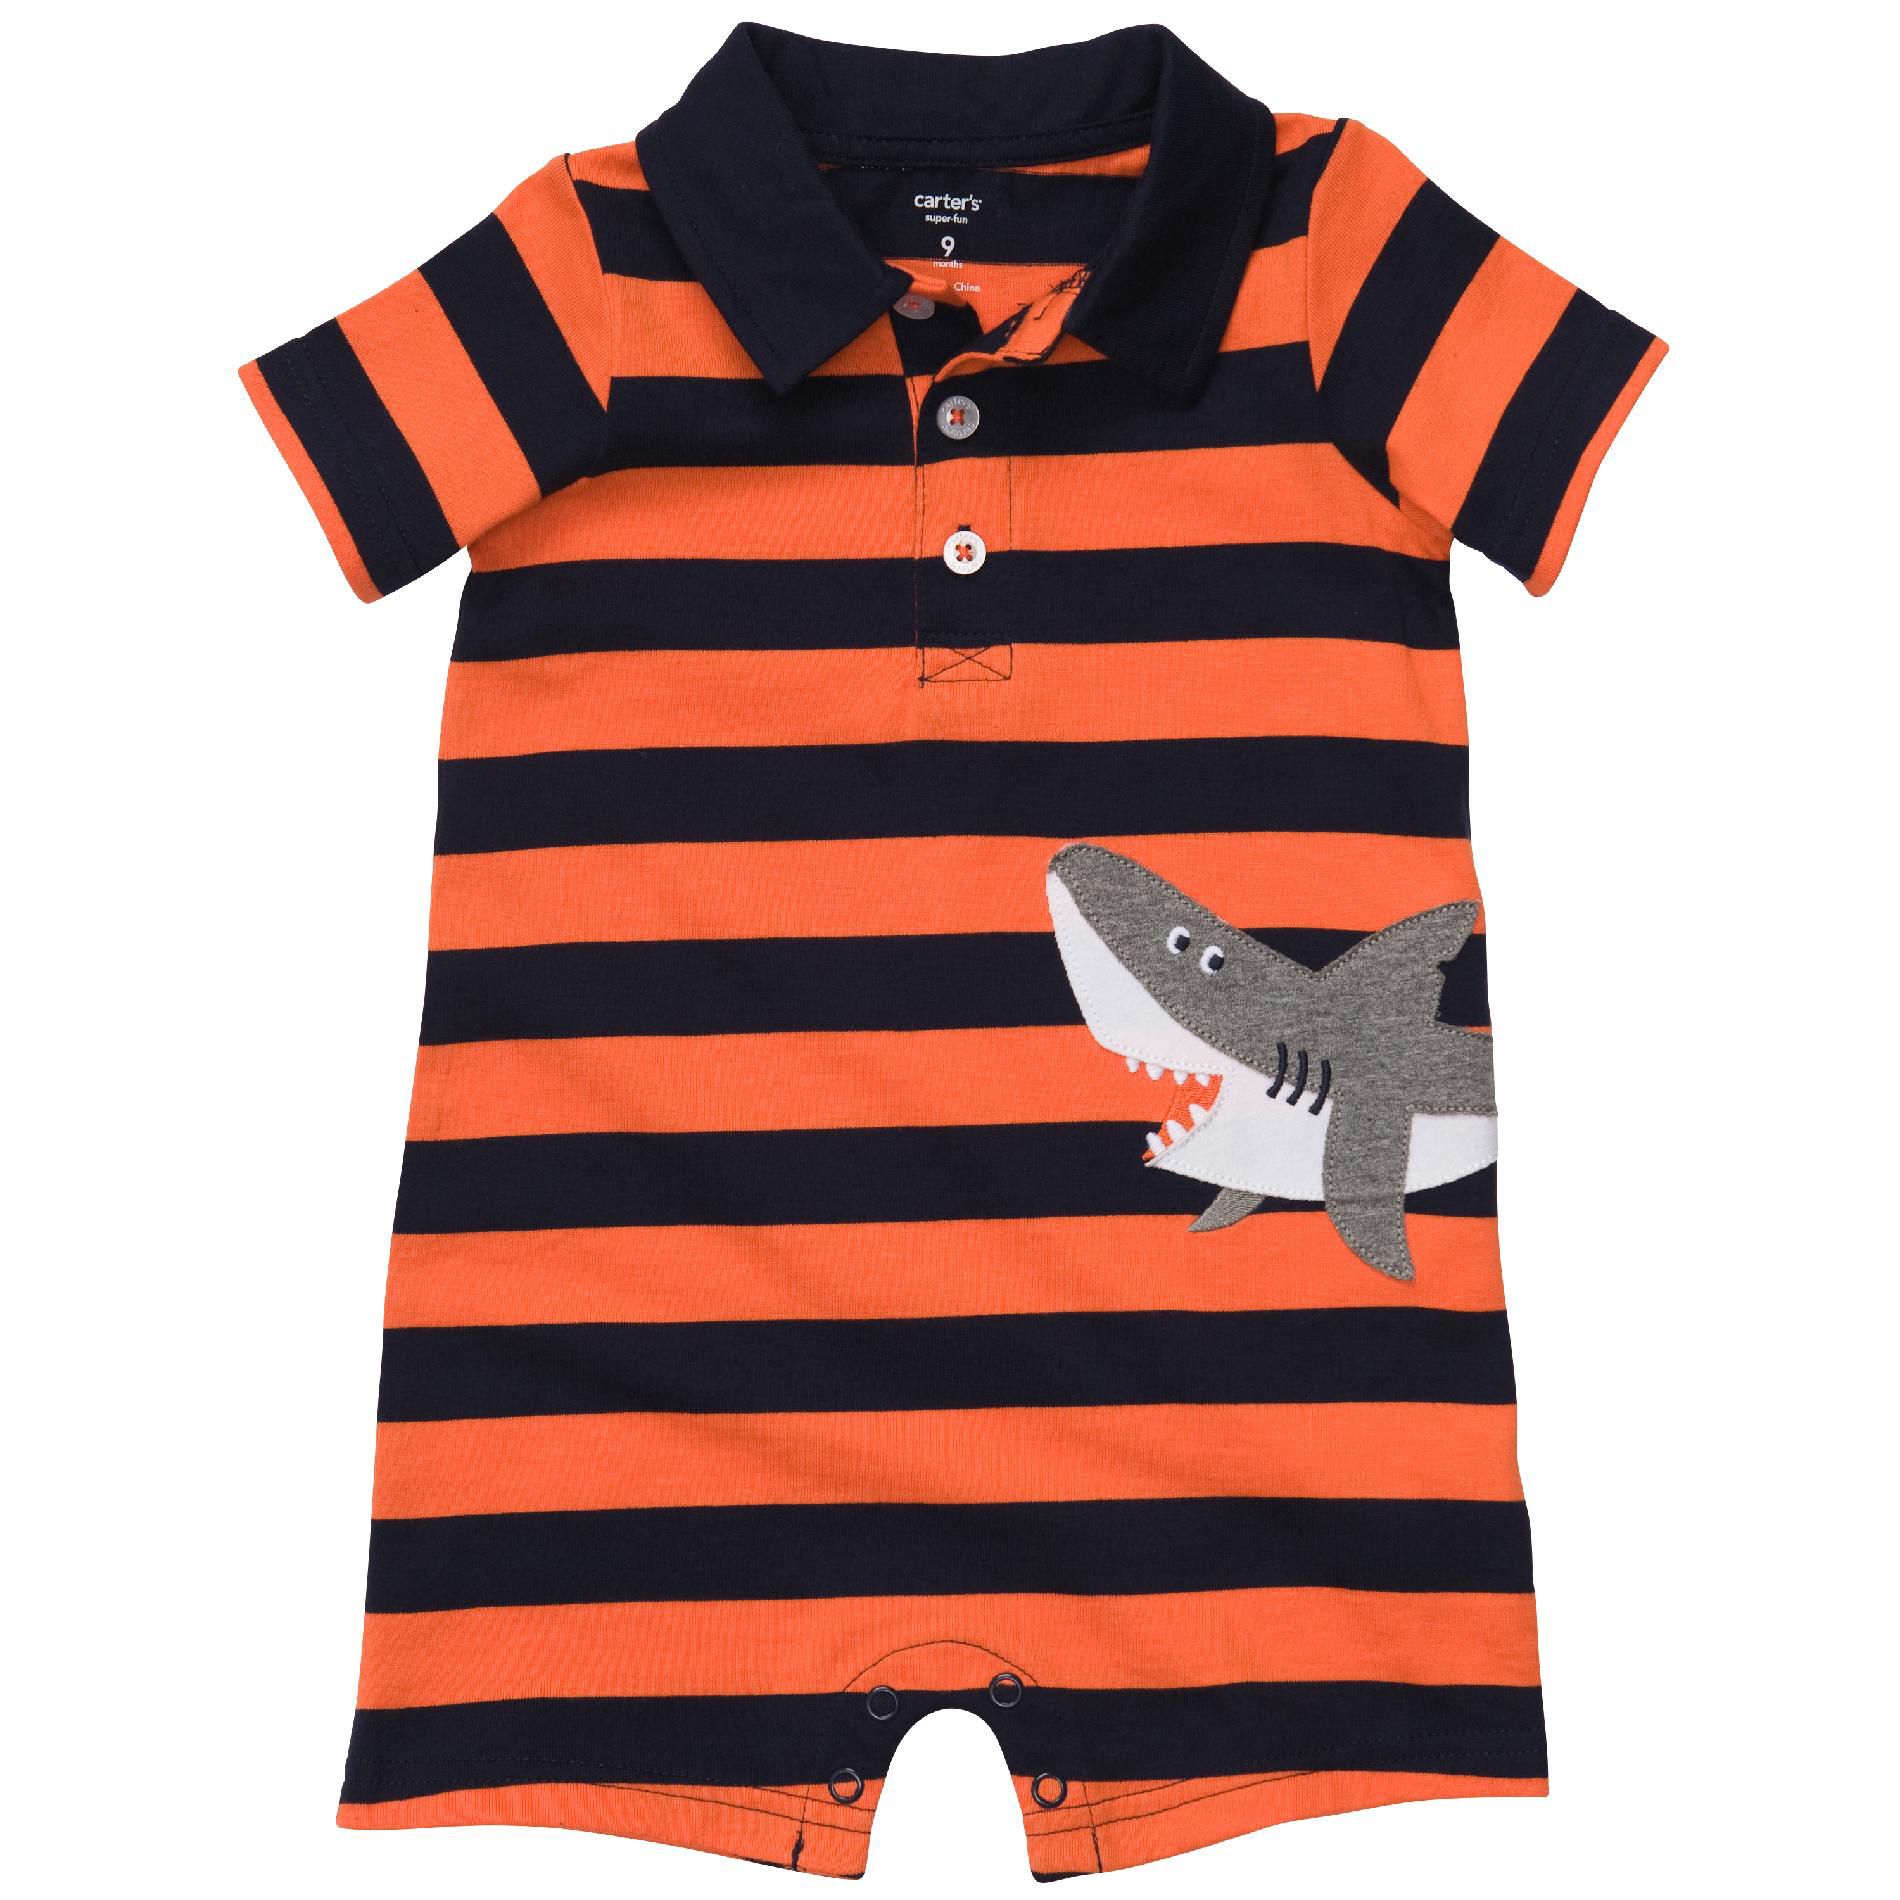 Carter's Boy's Infant Romper Shark Striped Navy/Orange